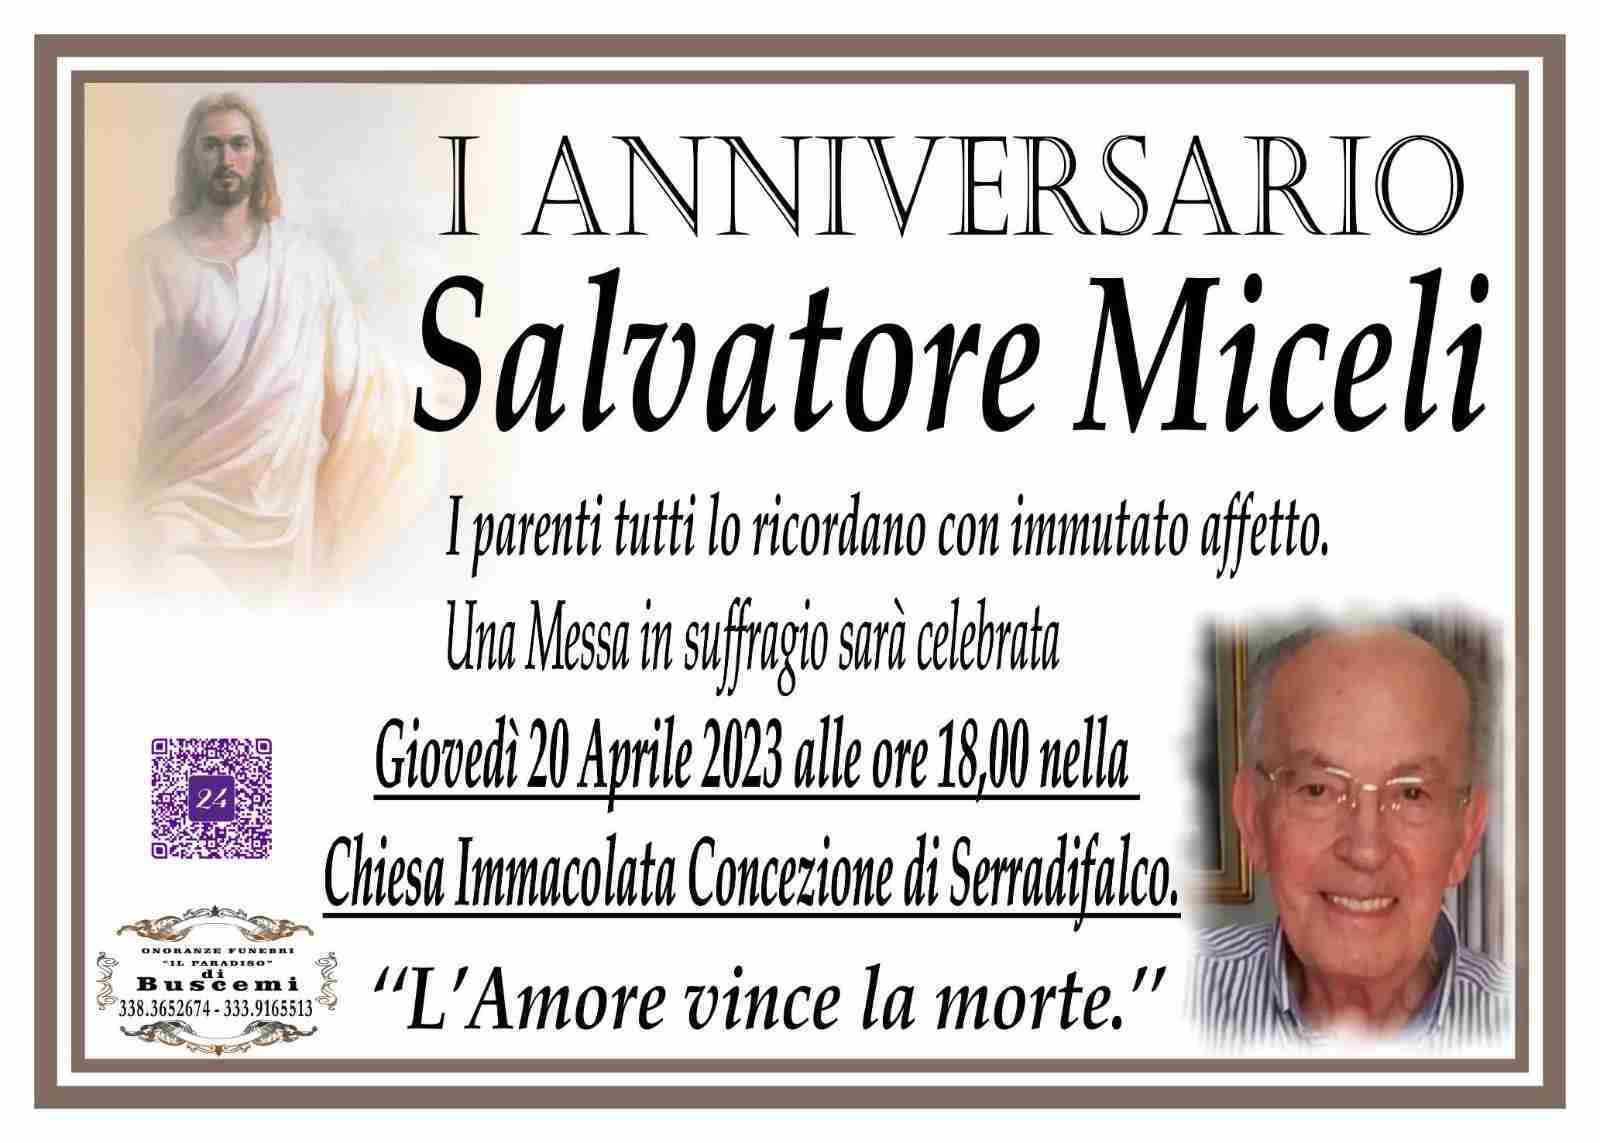 Salvatore Miceli